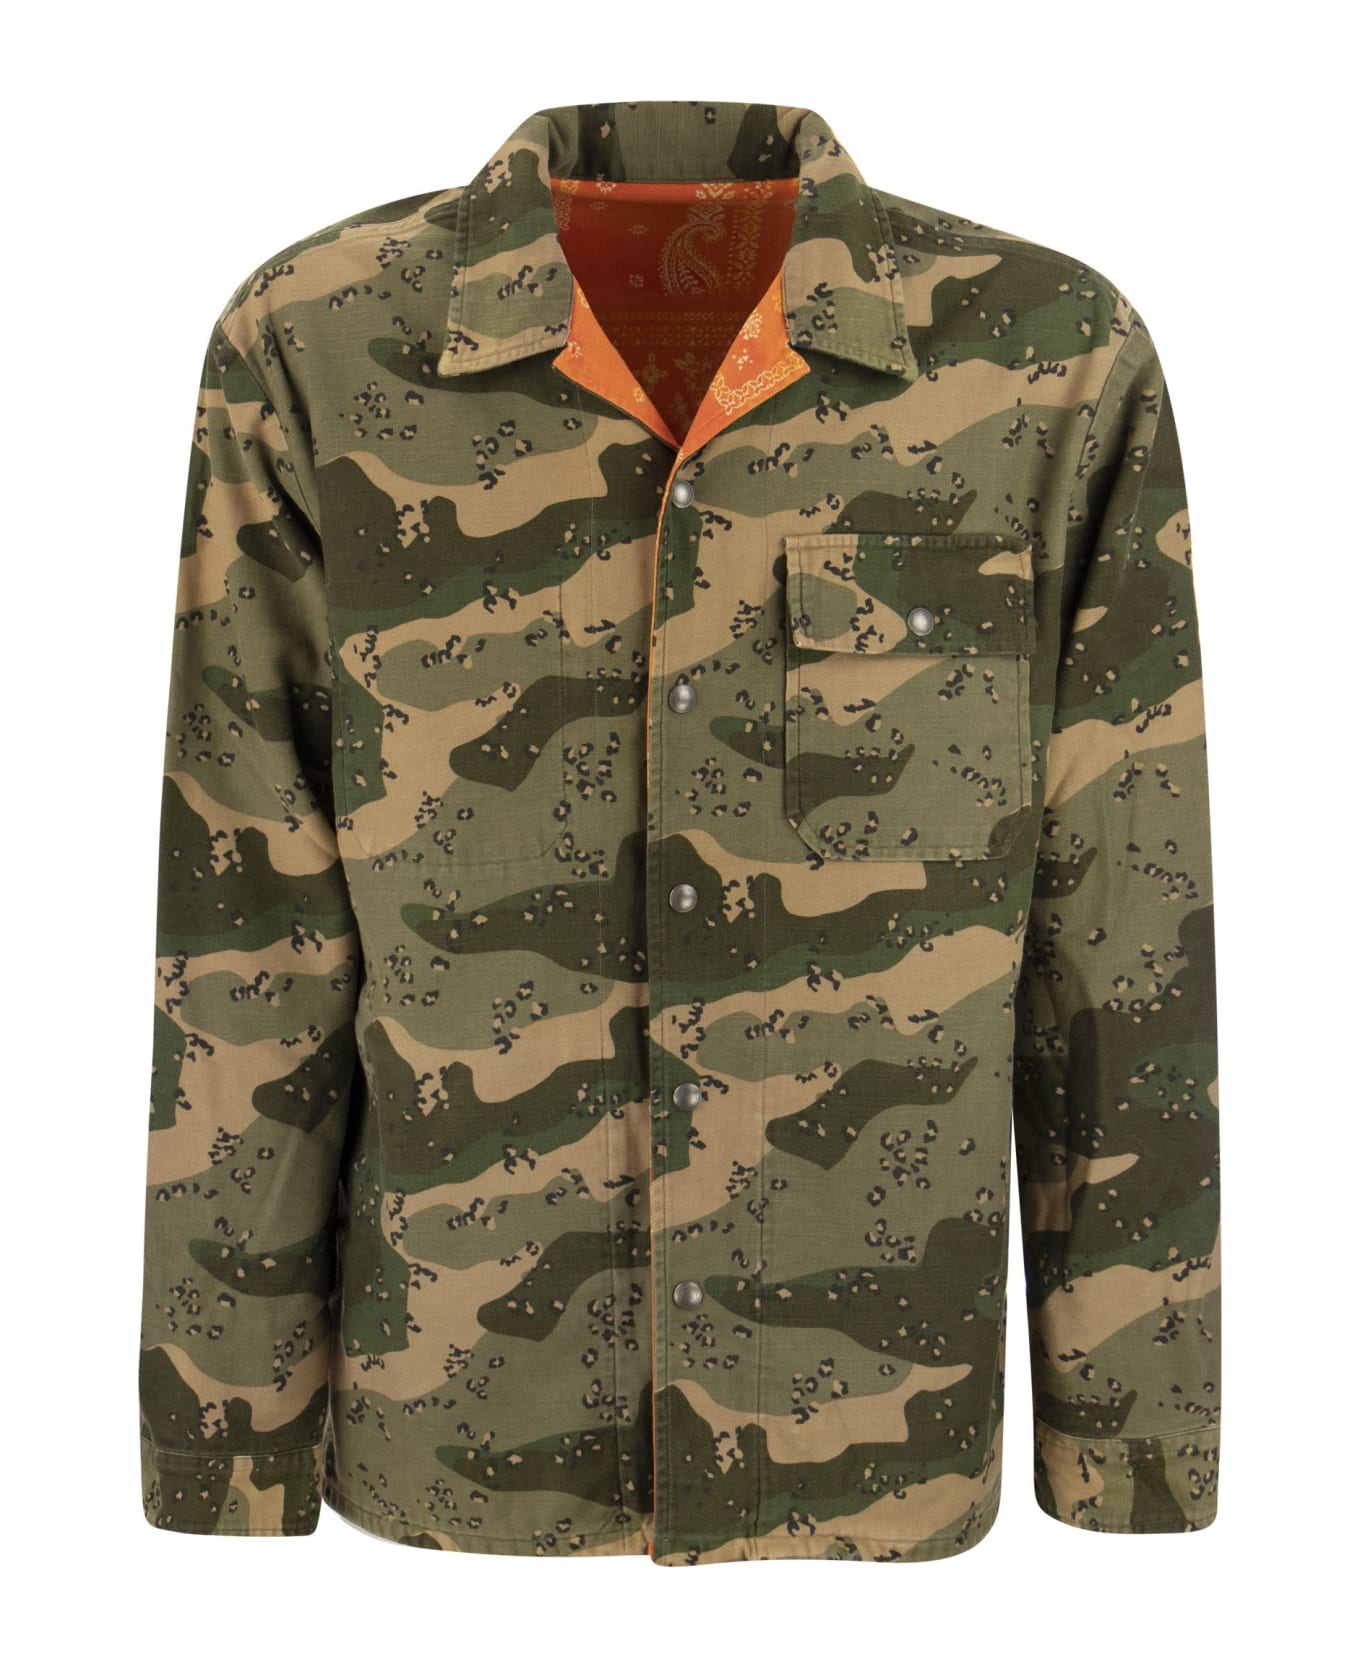 Polo Ralph Lauren Reversible Cotton Shirt - Military/orange